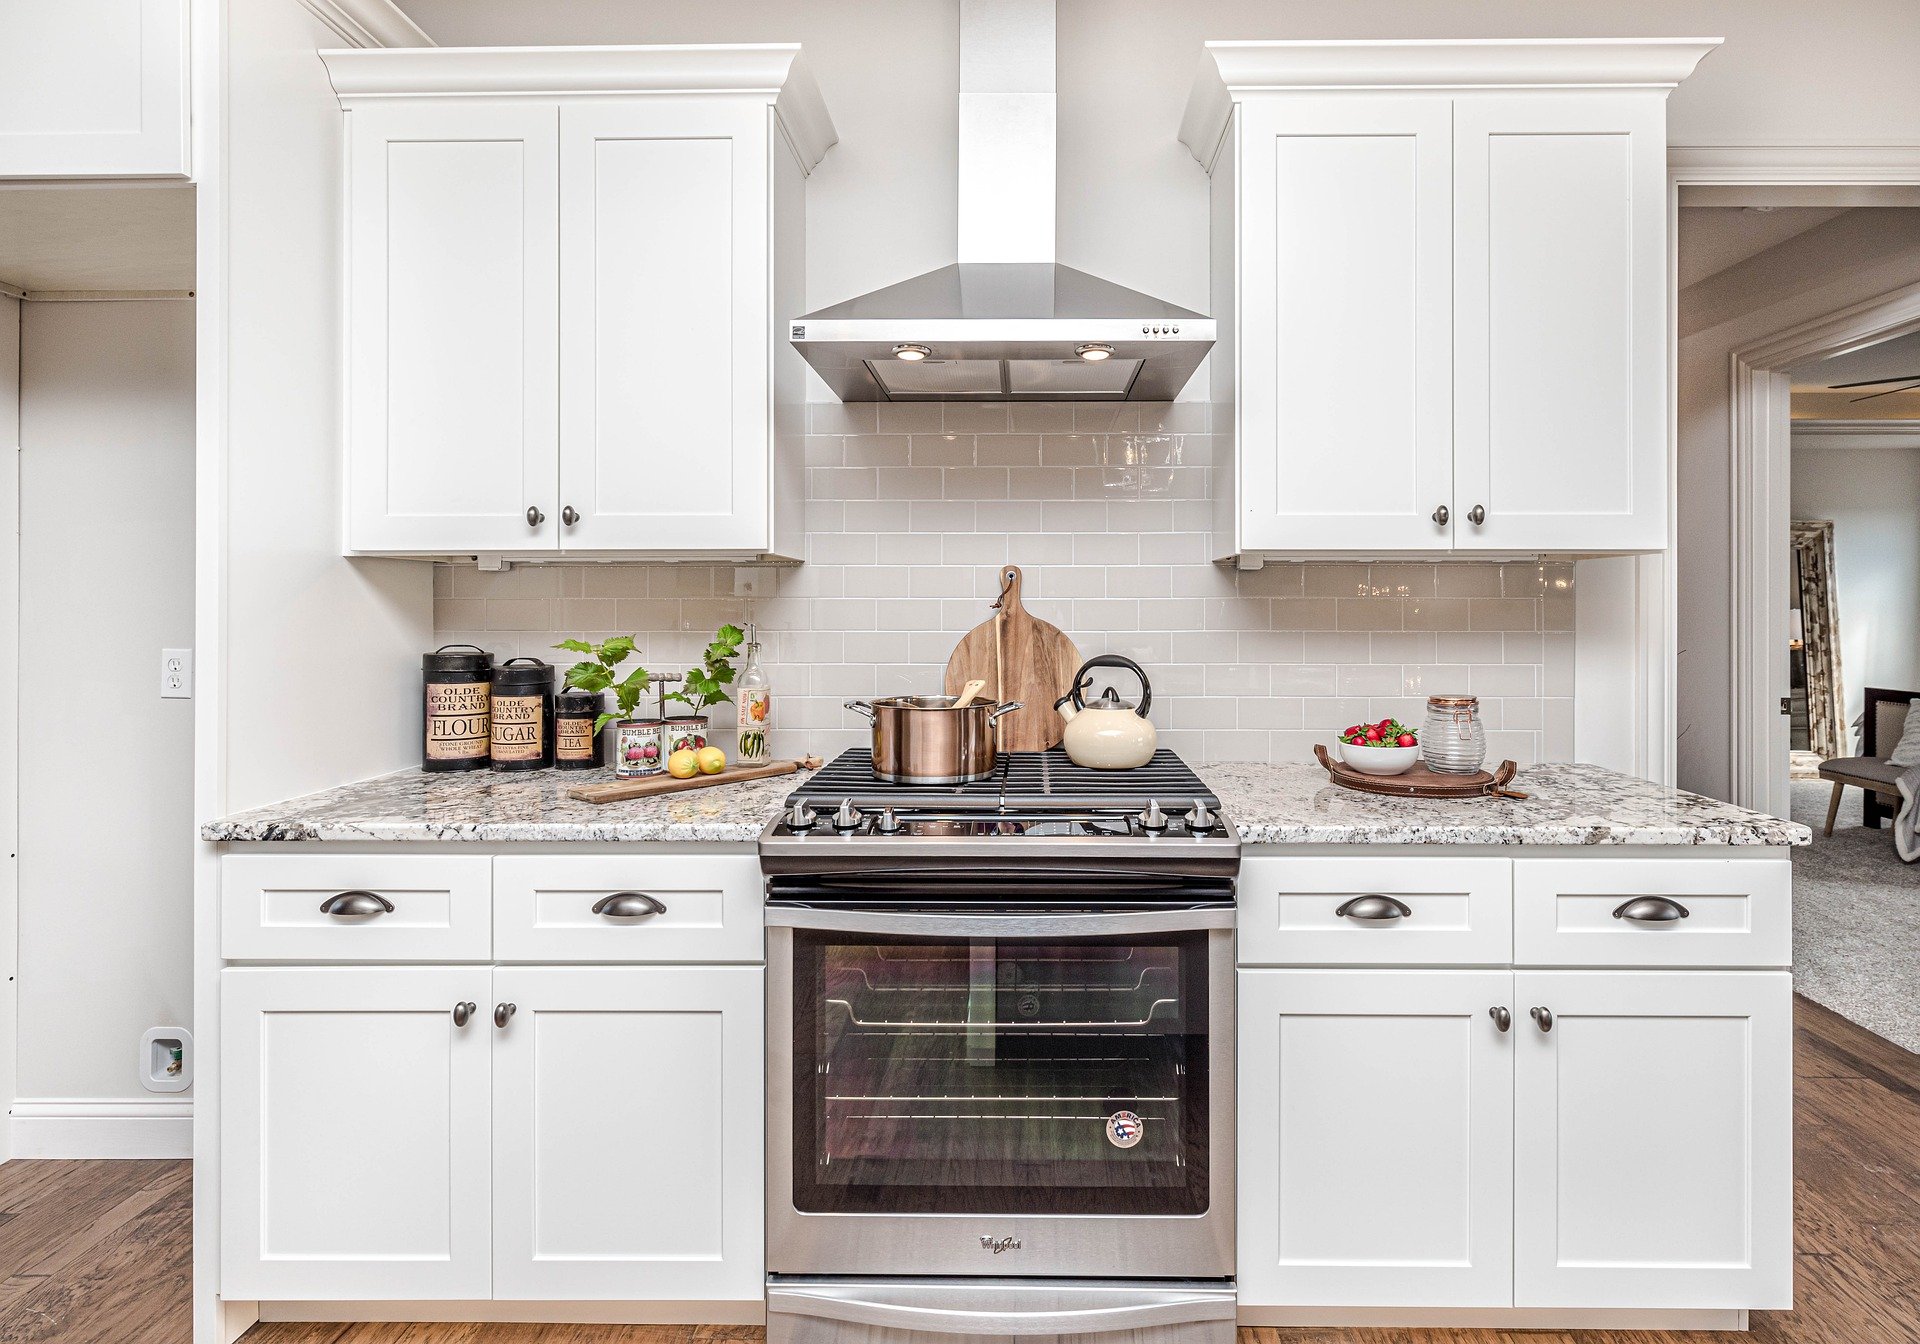 Top of kitchen cabinet trends: The Larder Kitchen Cabinet 6’